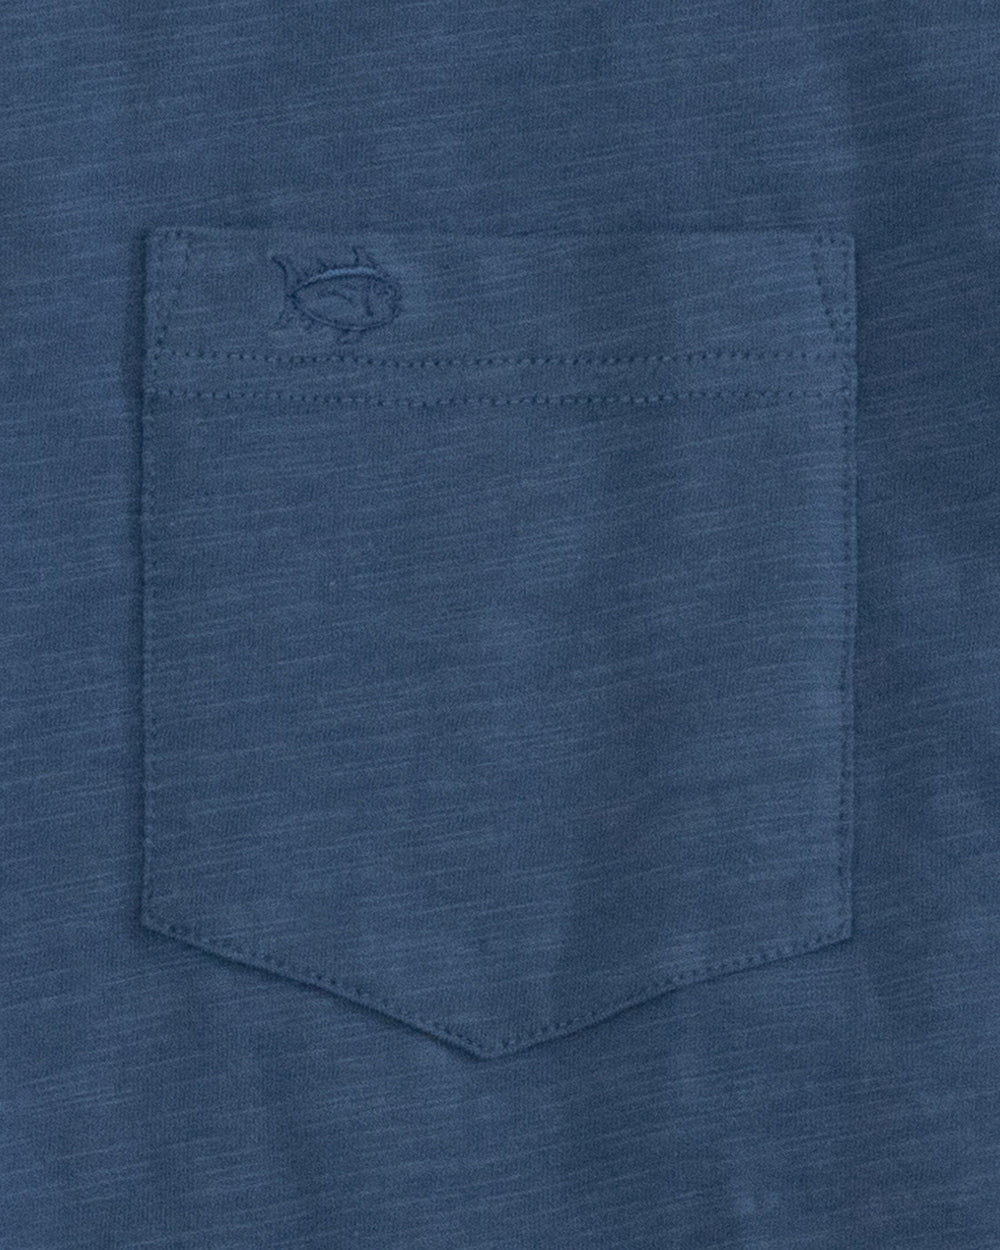 The pocket of the Men's Sun Farer Short Sleeve T-Shirt by Southern Tide - Dark Denim